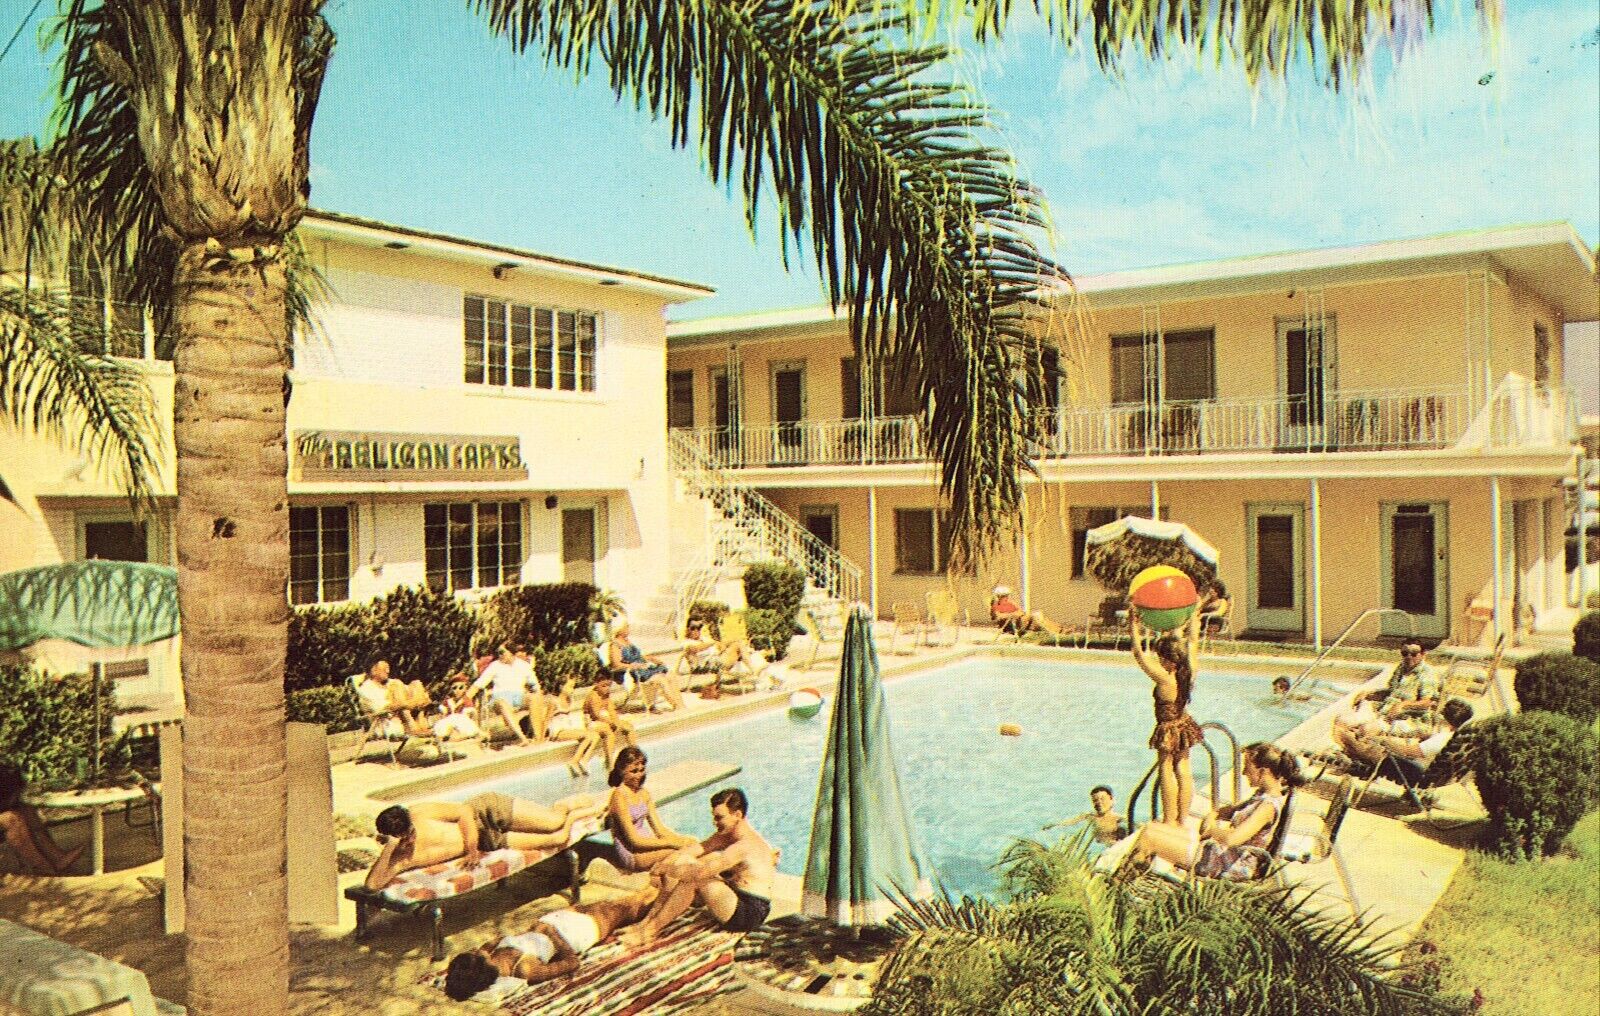 Pool, Pelican Apartments - St. Petersburg, Florida Vintage Postcard